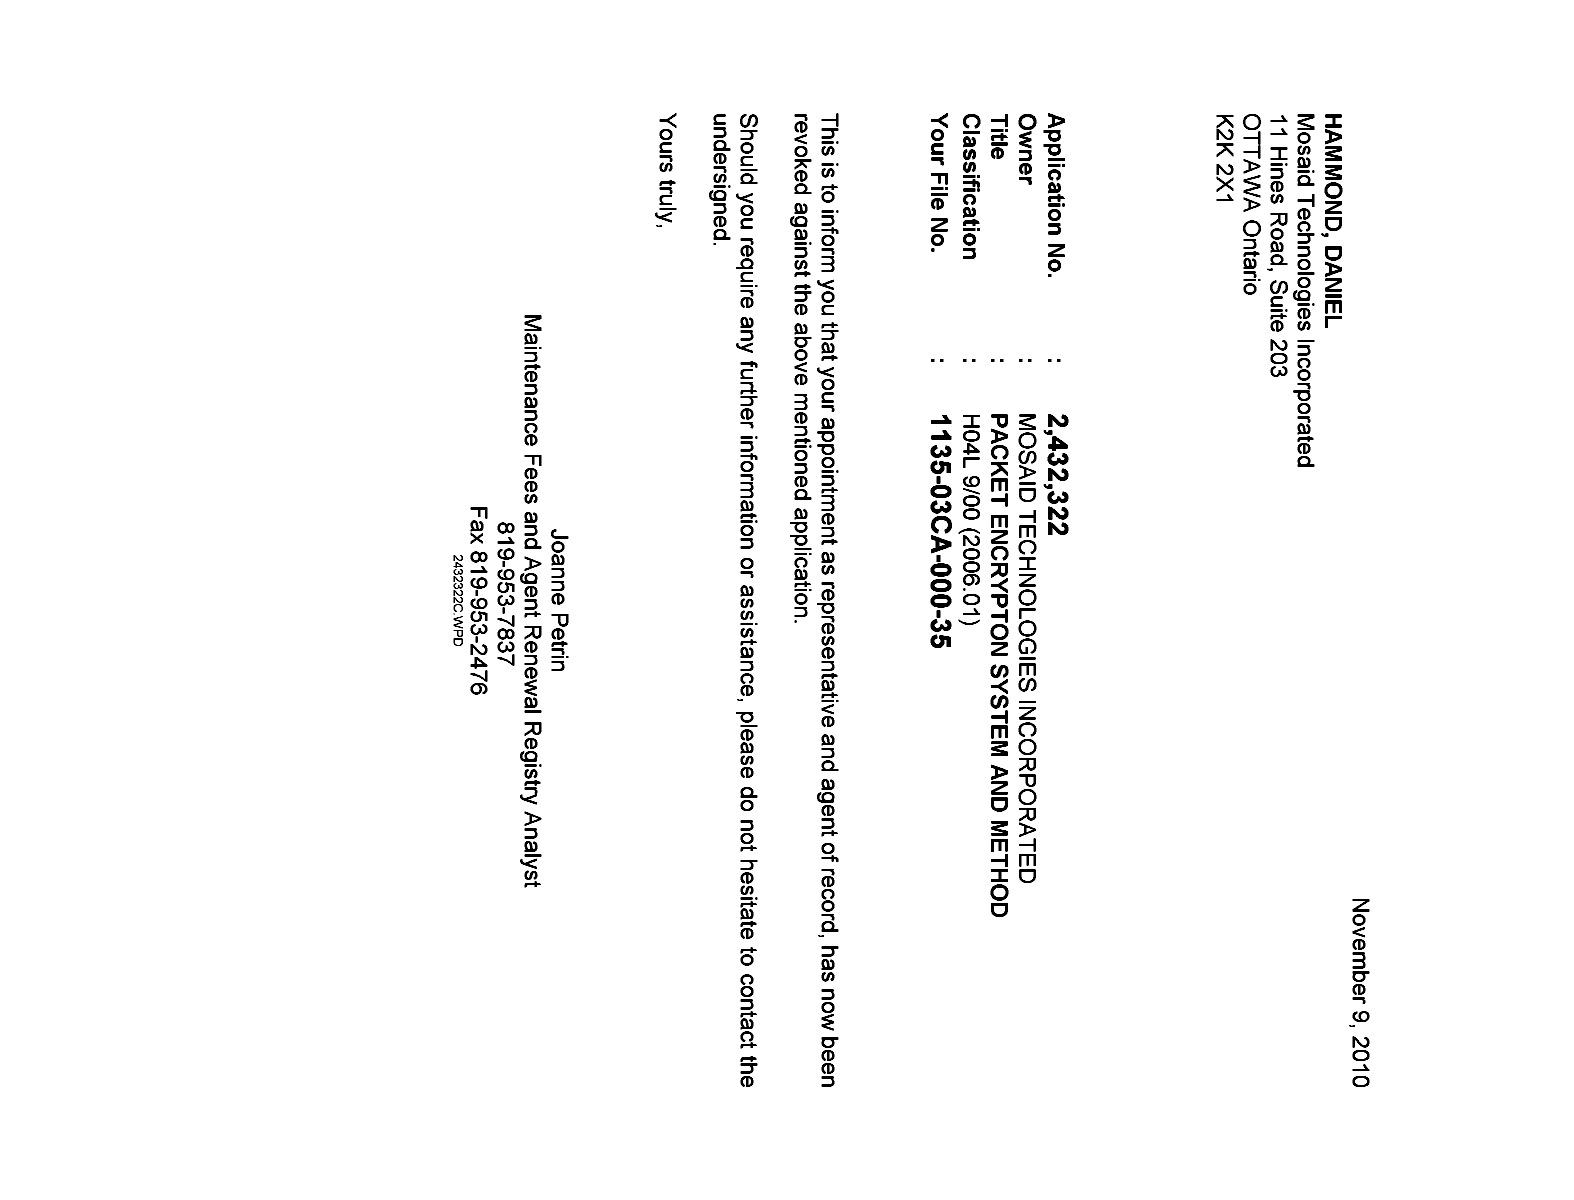 Canadian Patent Document 2432322. Correspondence 20101109. Image 1 of 1